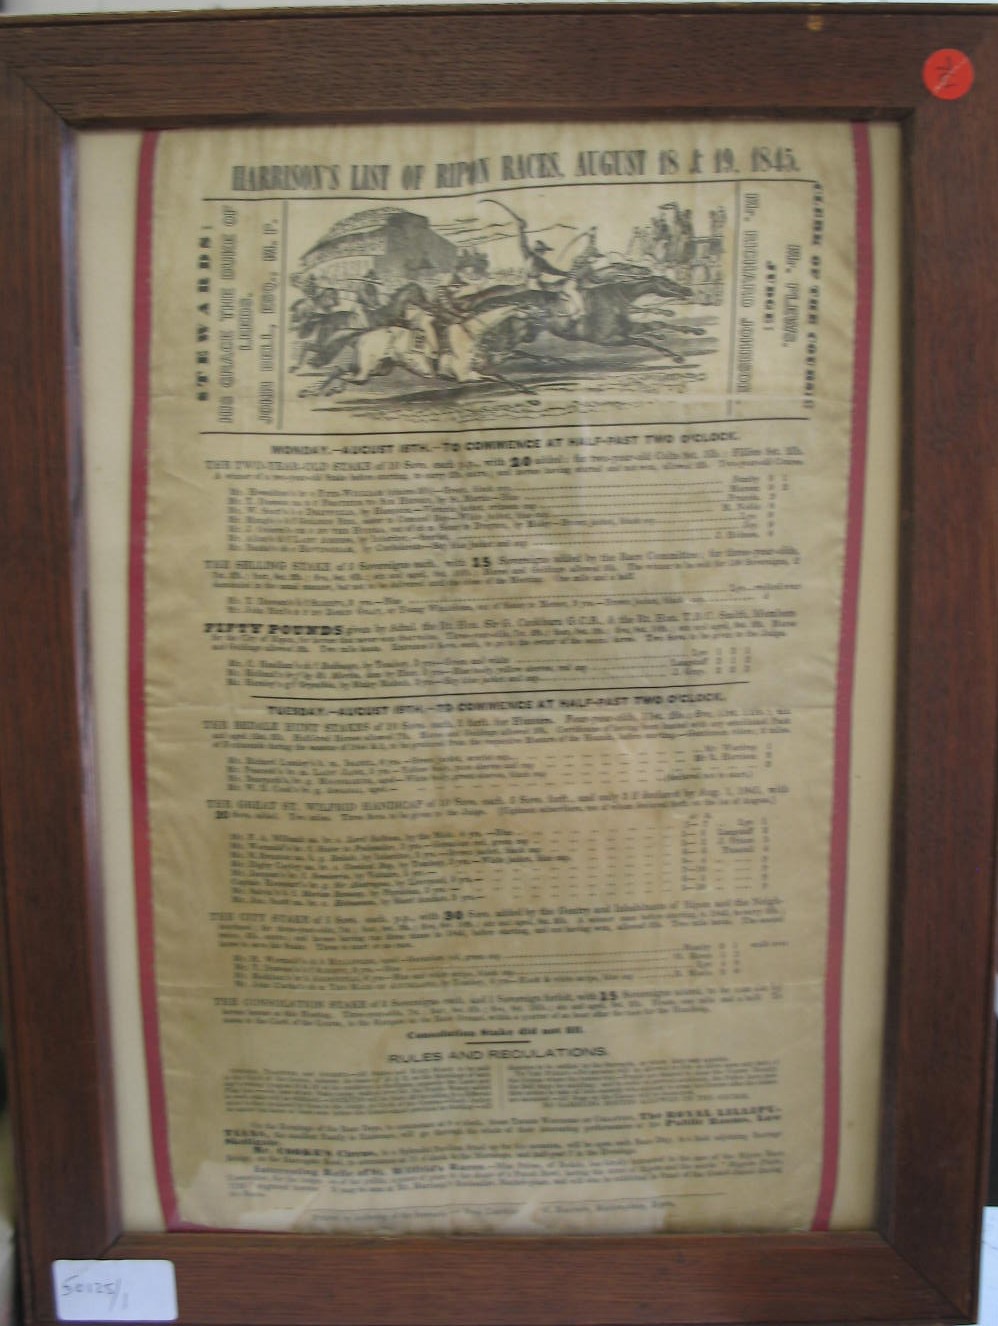 [PRINTED on SILK / RACING] "Harrison's List of Ripon Races, August 18 & 19, 1845" broadside on silk,